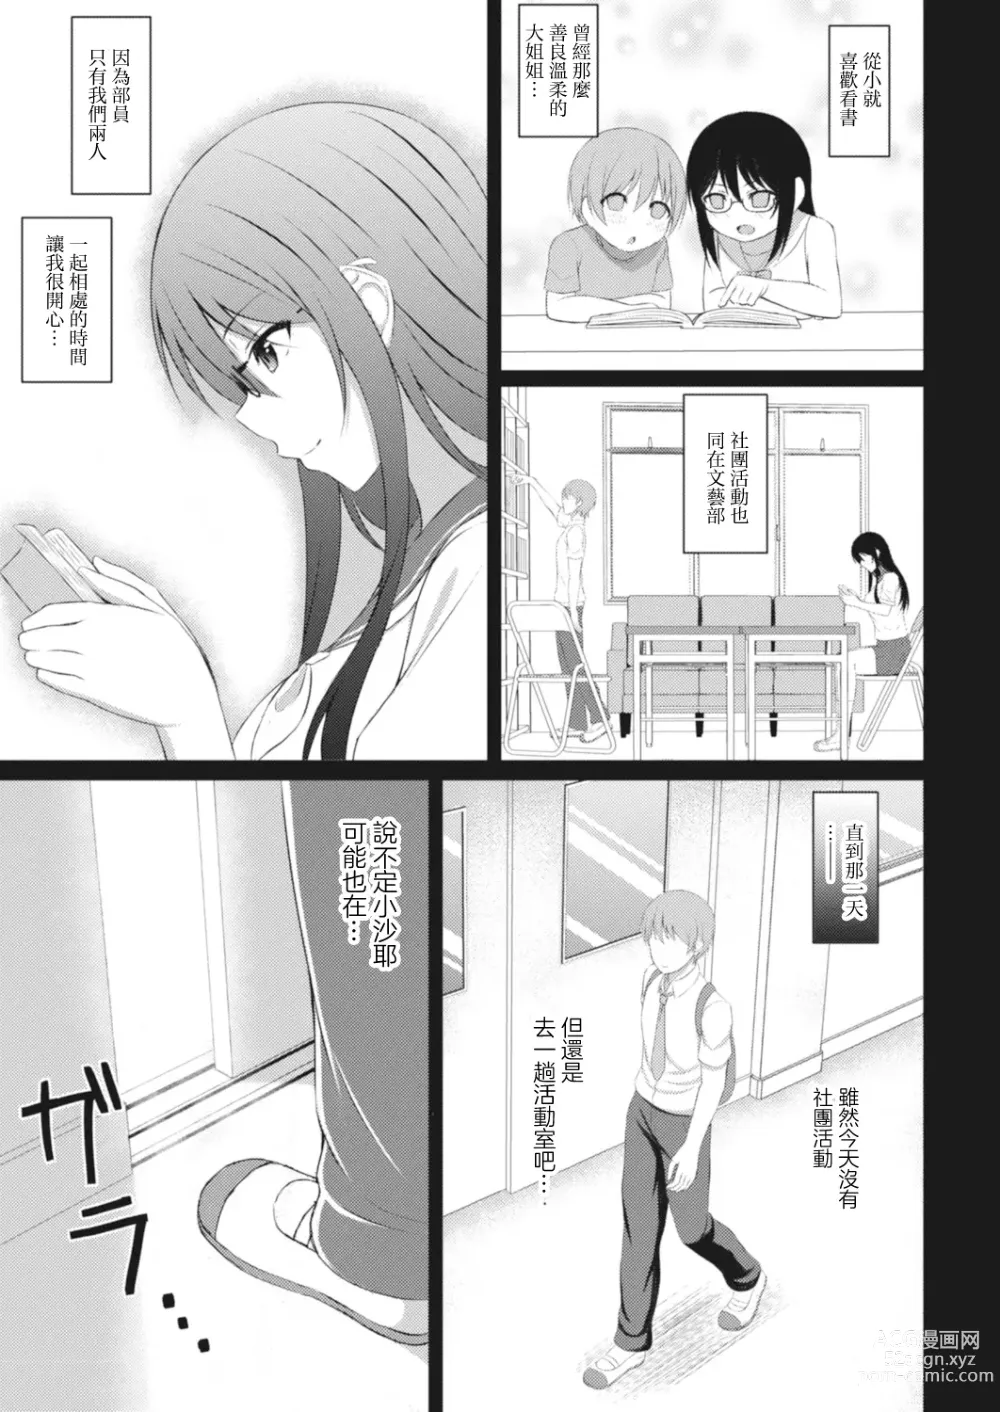 Page 5 of manga SECRET ROOM